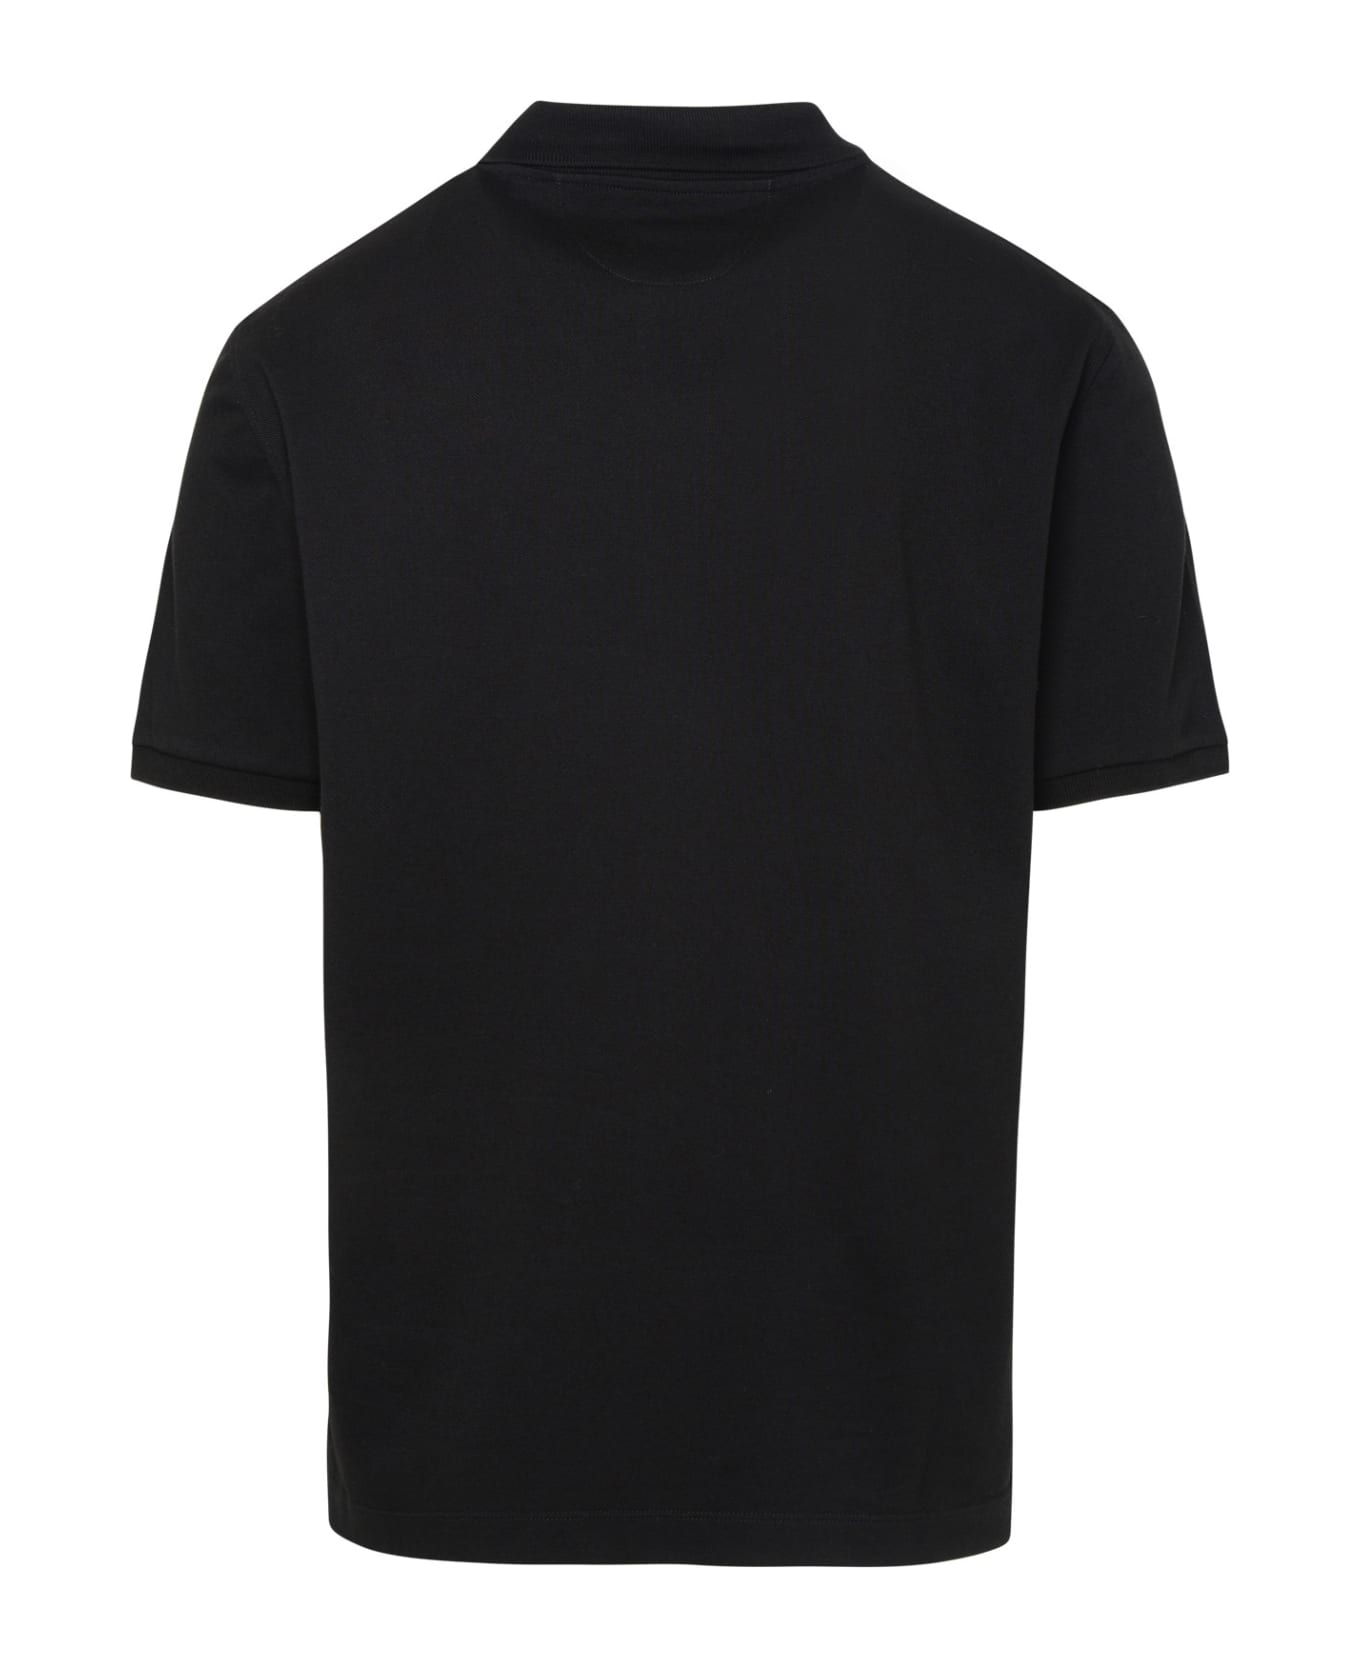 Ferrari Polo Shirt In Black Cotton - BLACK